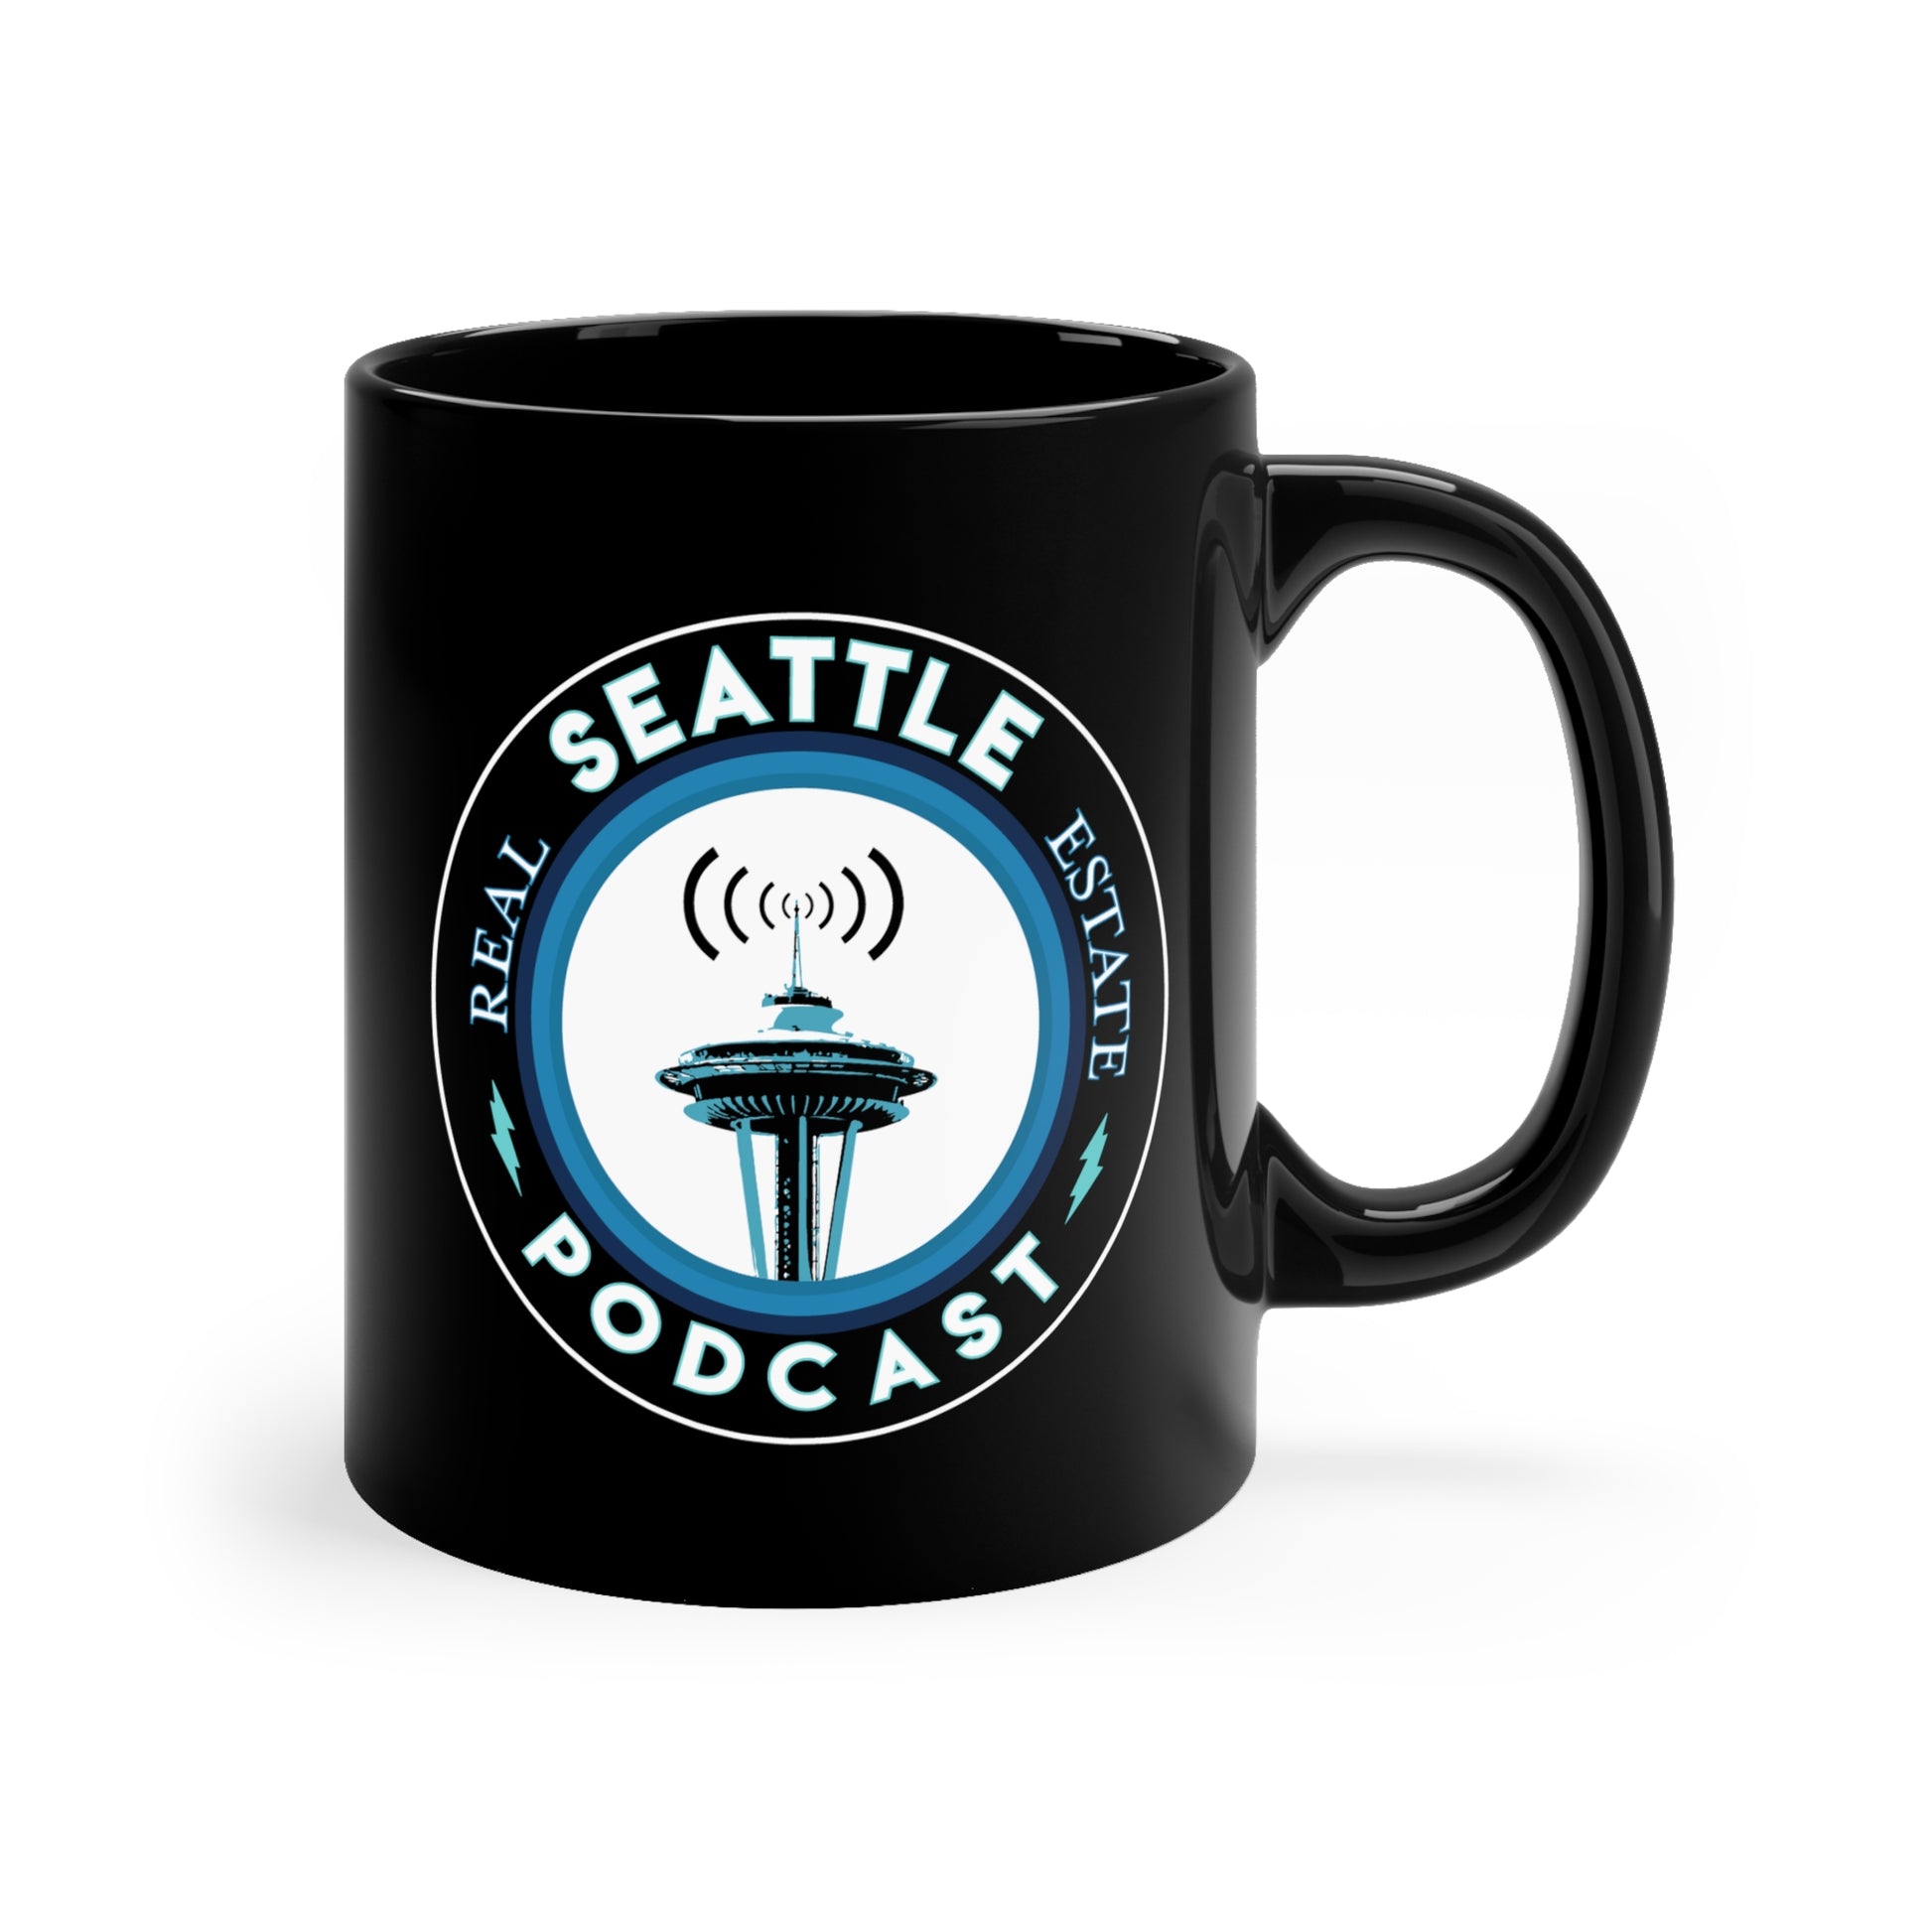 Vintage Seattle Real Estate Podcast 11oz Black Mug - News For Reasonable People